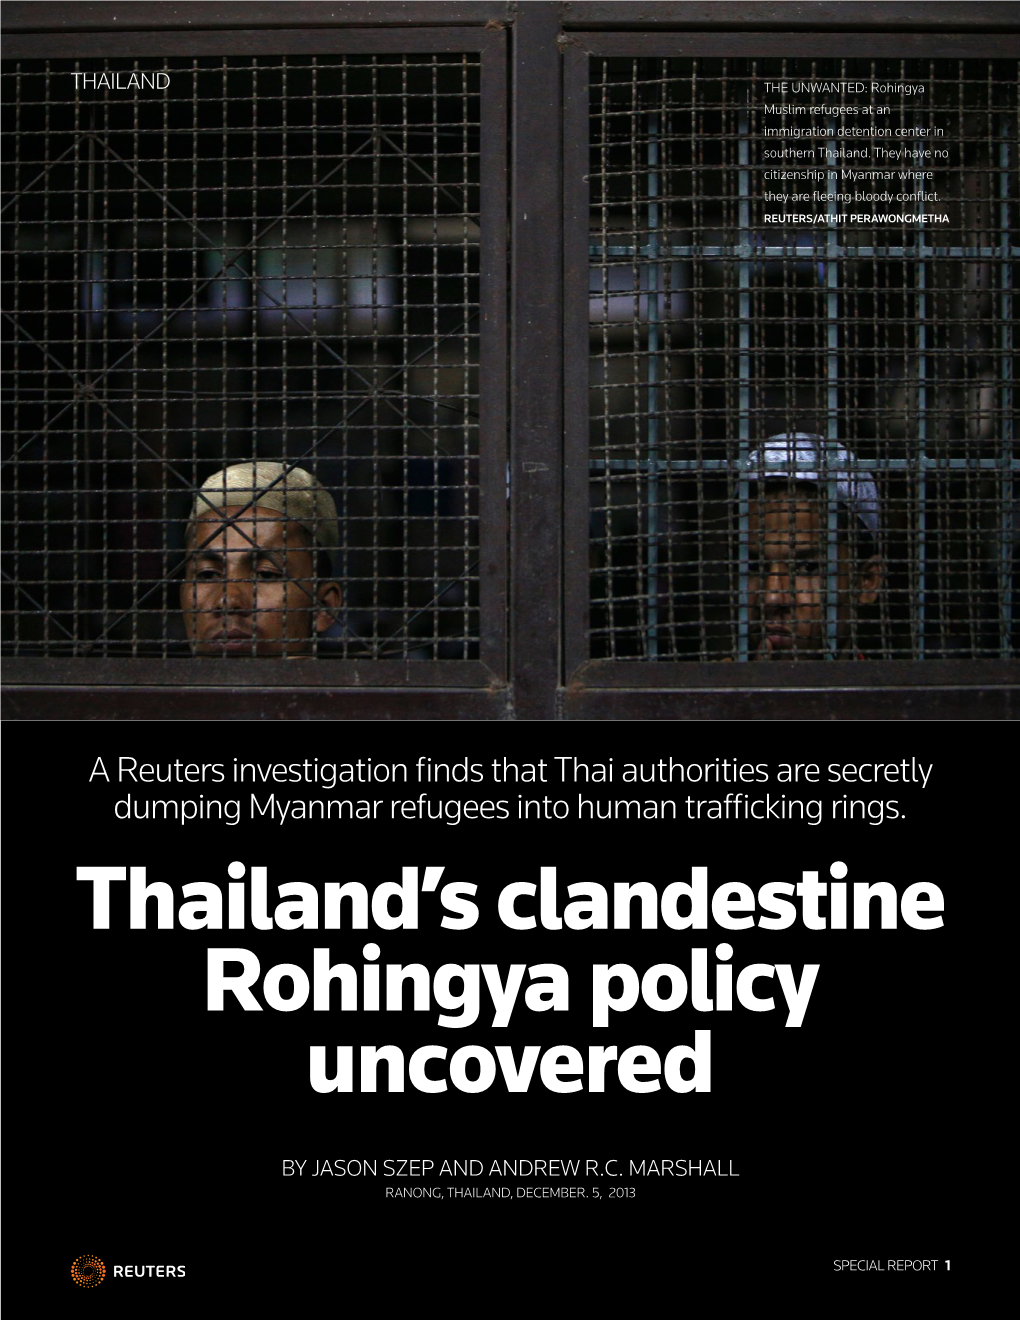 Thailand's Clandestine Rohingya Policy Uncovered